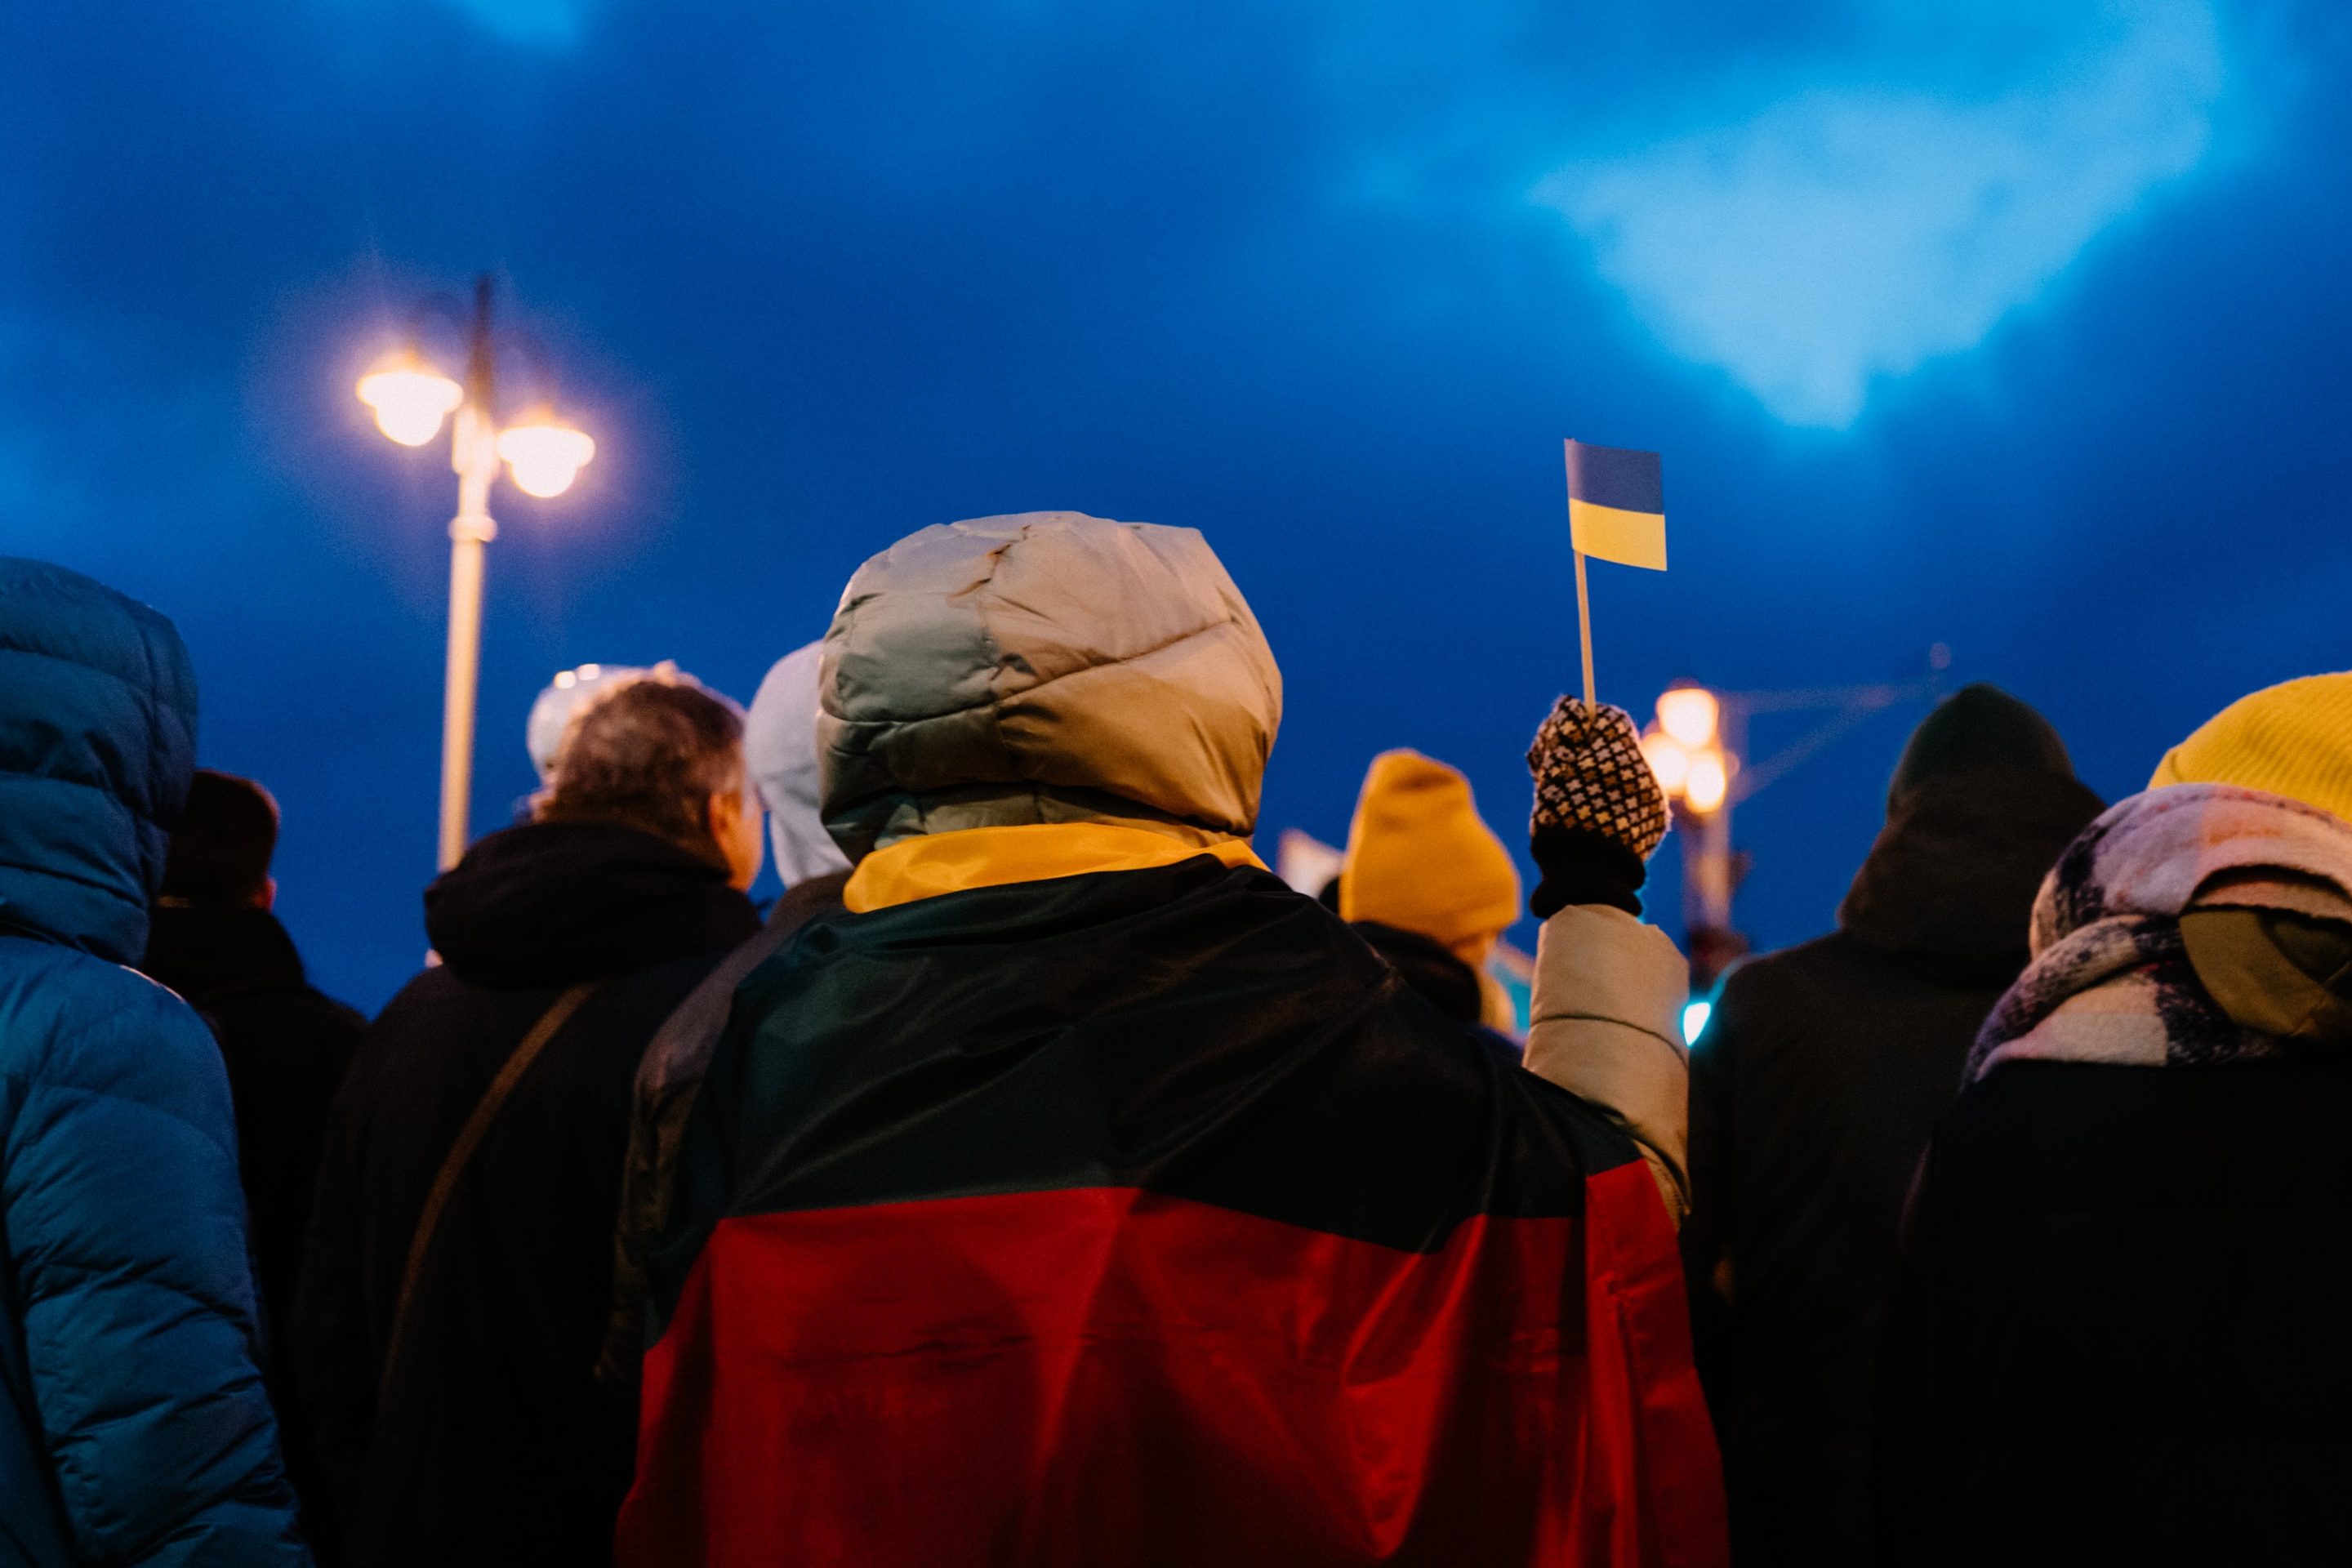 Ukraine protest with ukraine flags at night